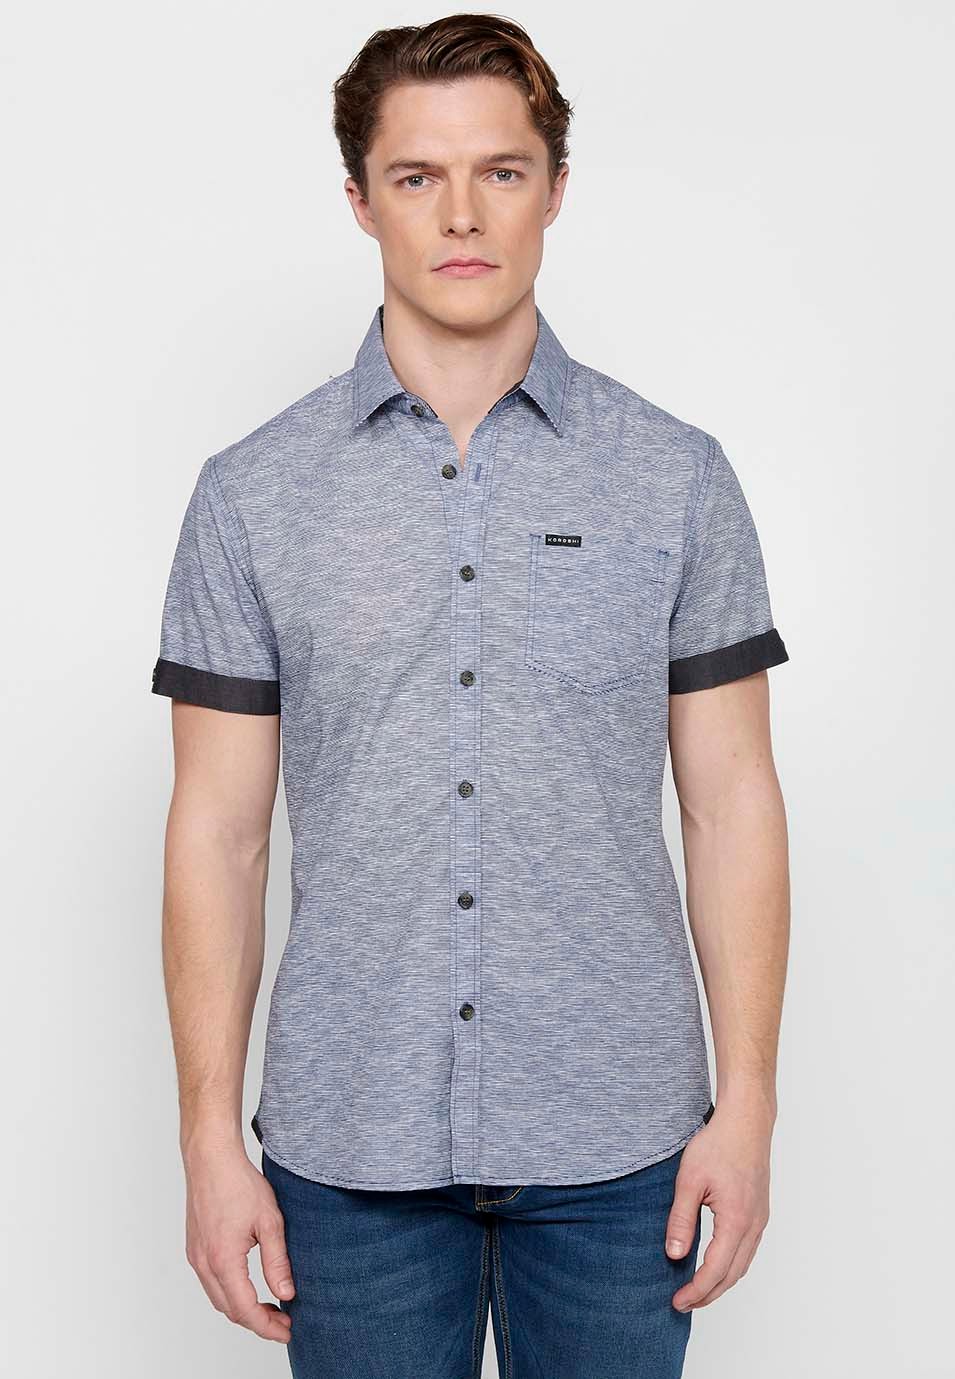 Short sleeve cotton shirt, blue color for men 5